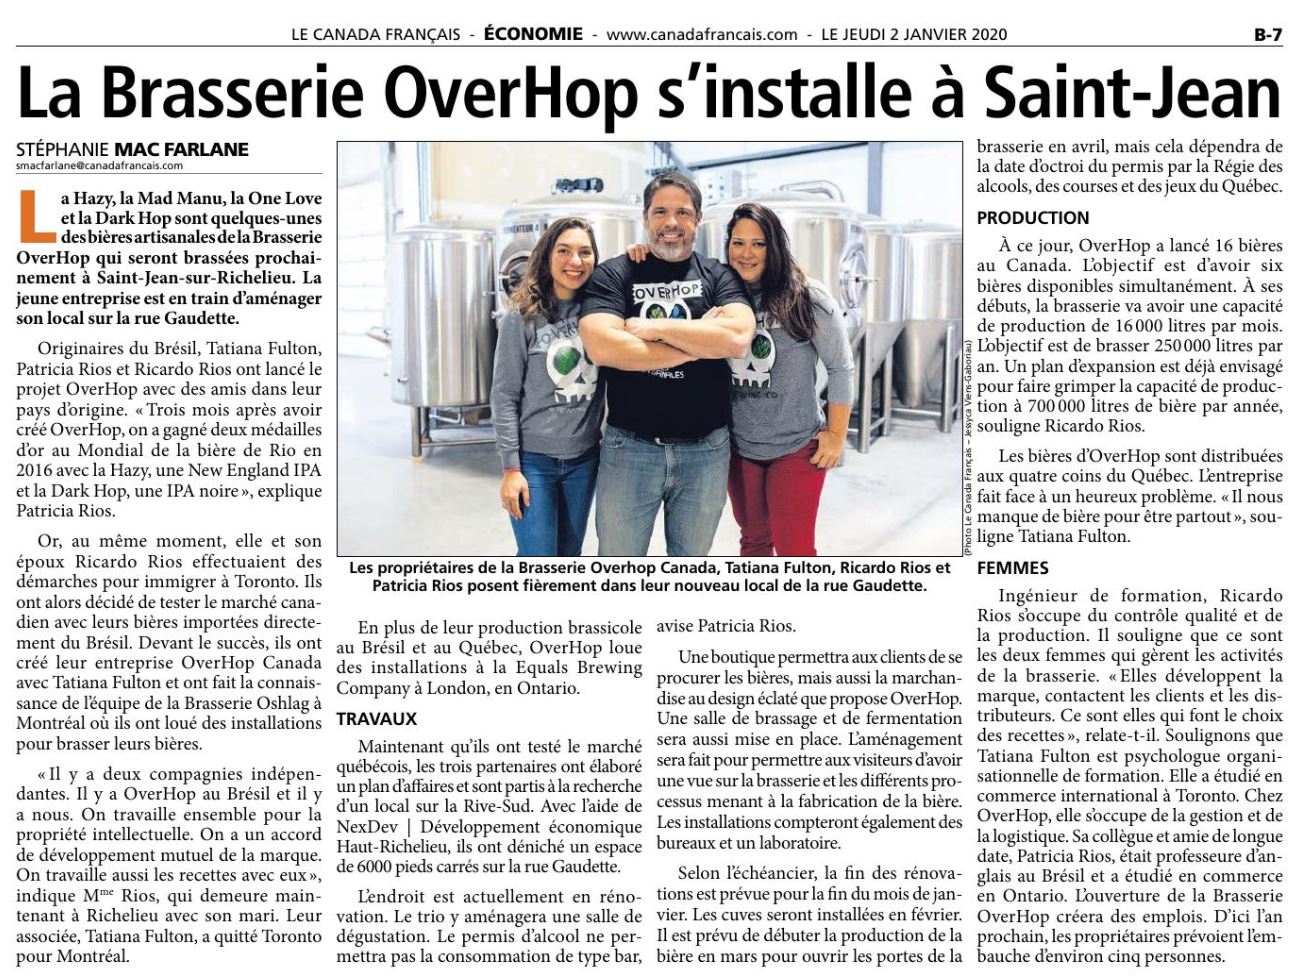 article-brewery-overhop-saint-jean